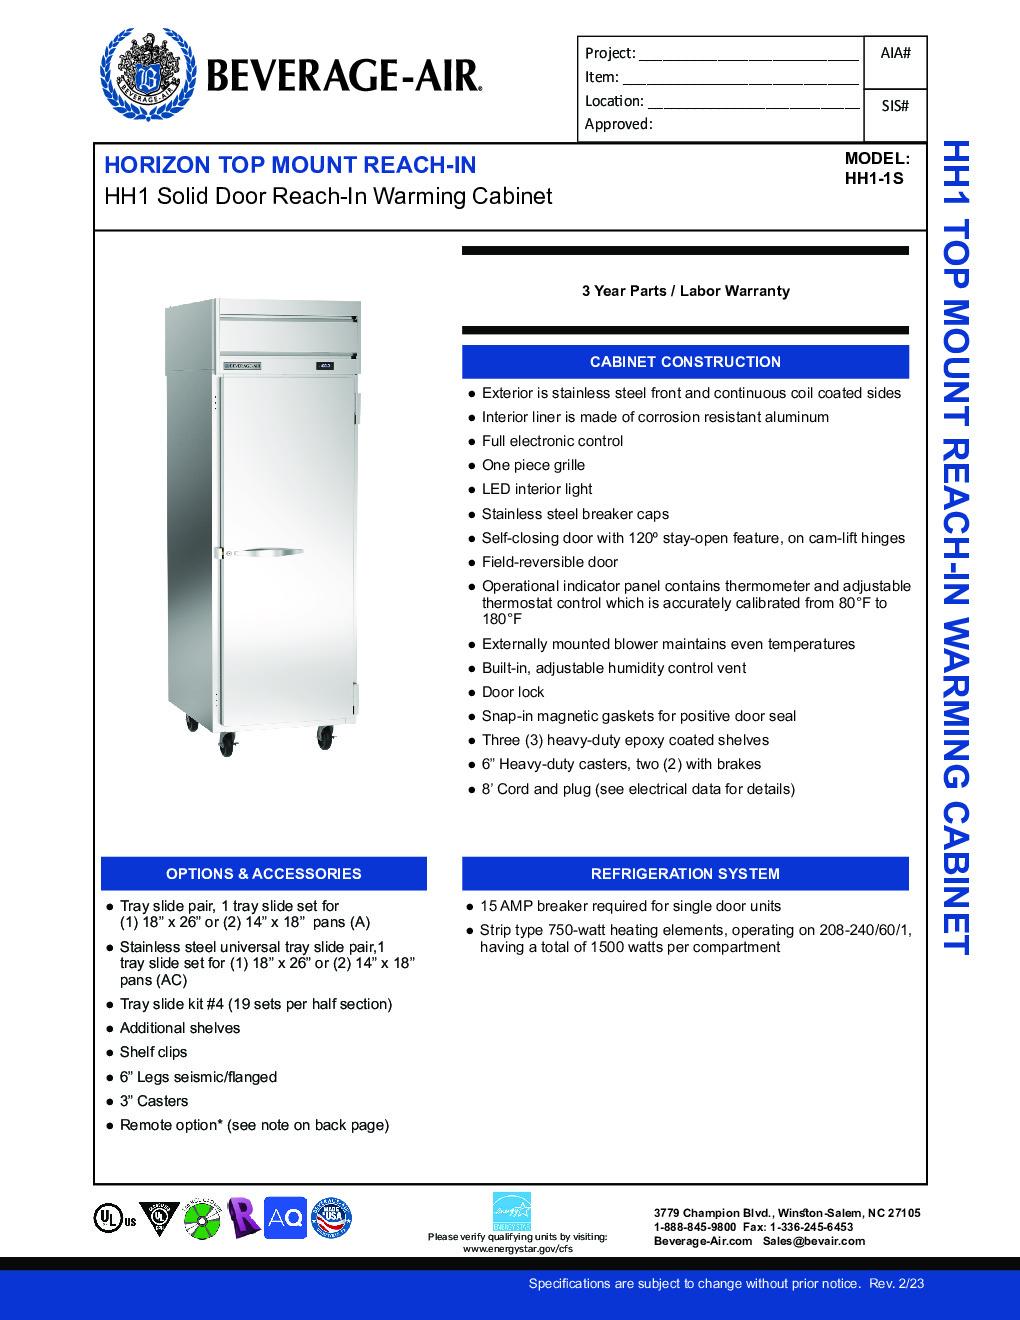 Beverage Air HH1-1S Reach-In Heated Cabinet